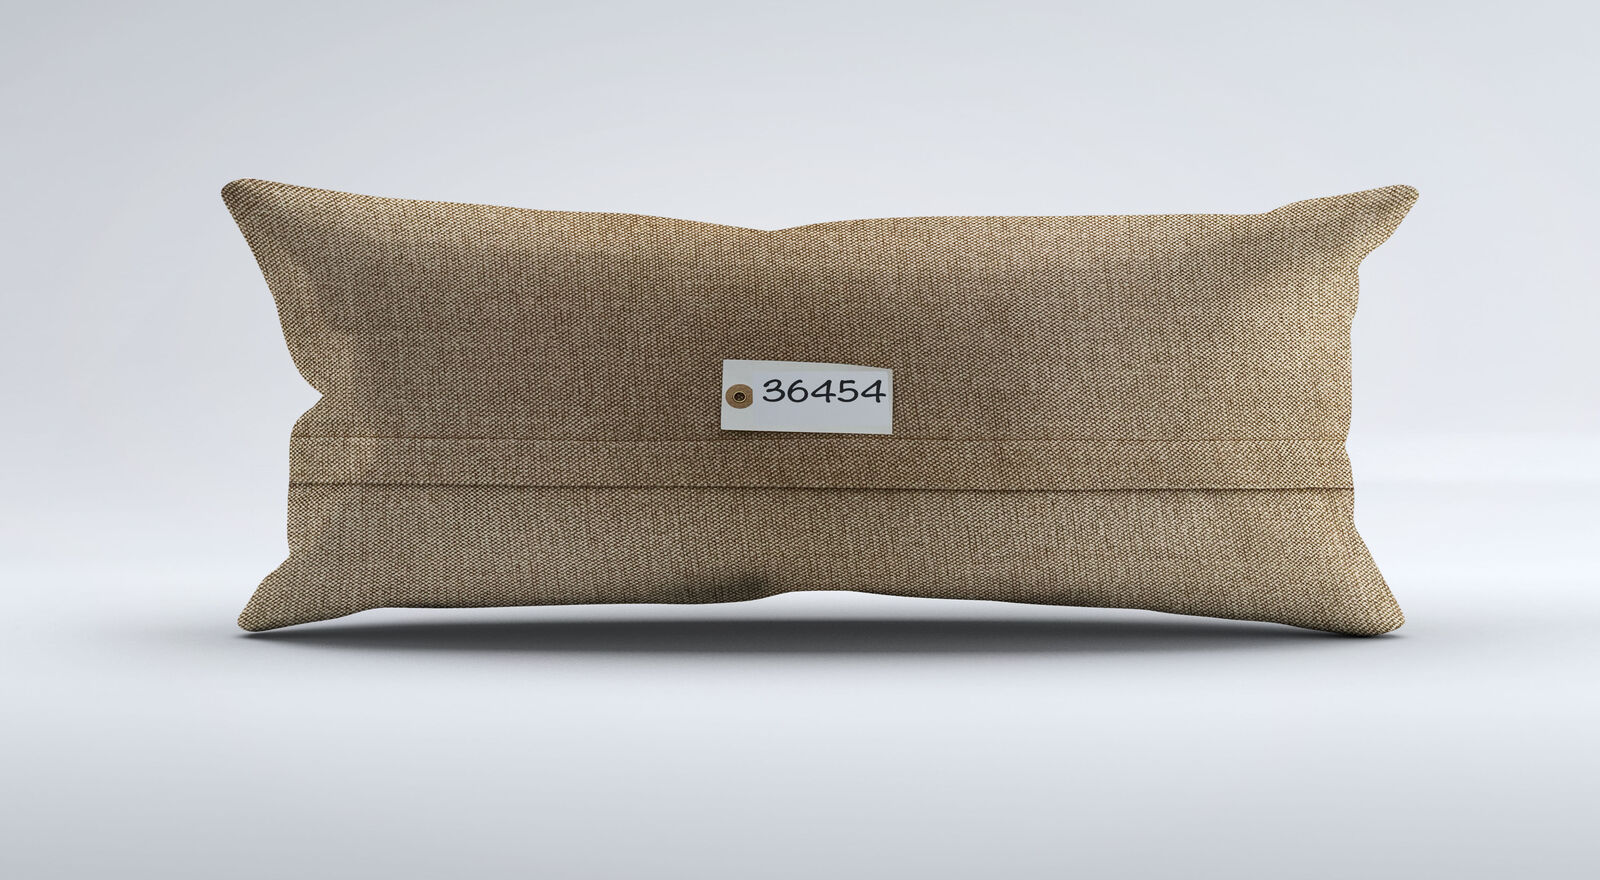 Vintage Turkish Kilim Cushion Cover 30x60 cm Lumbar Wool Kelim Pillowcase 36454